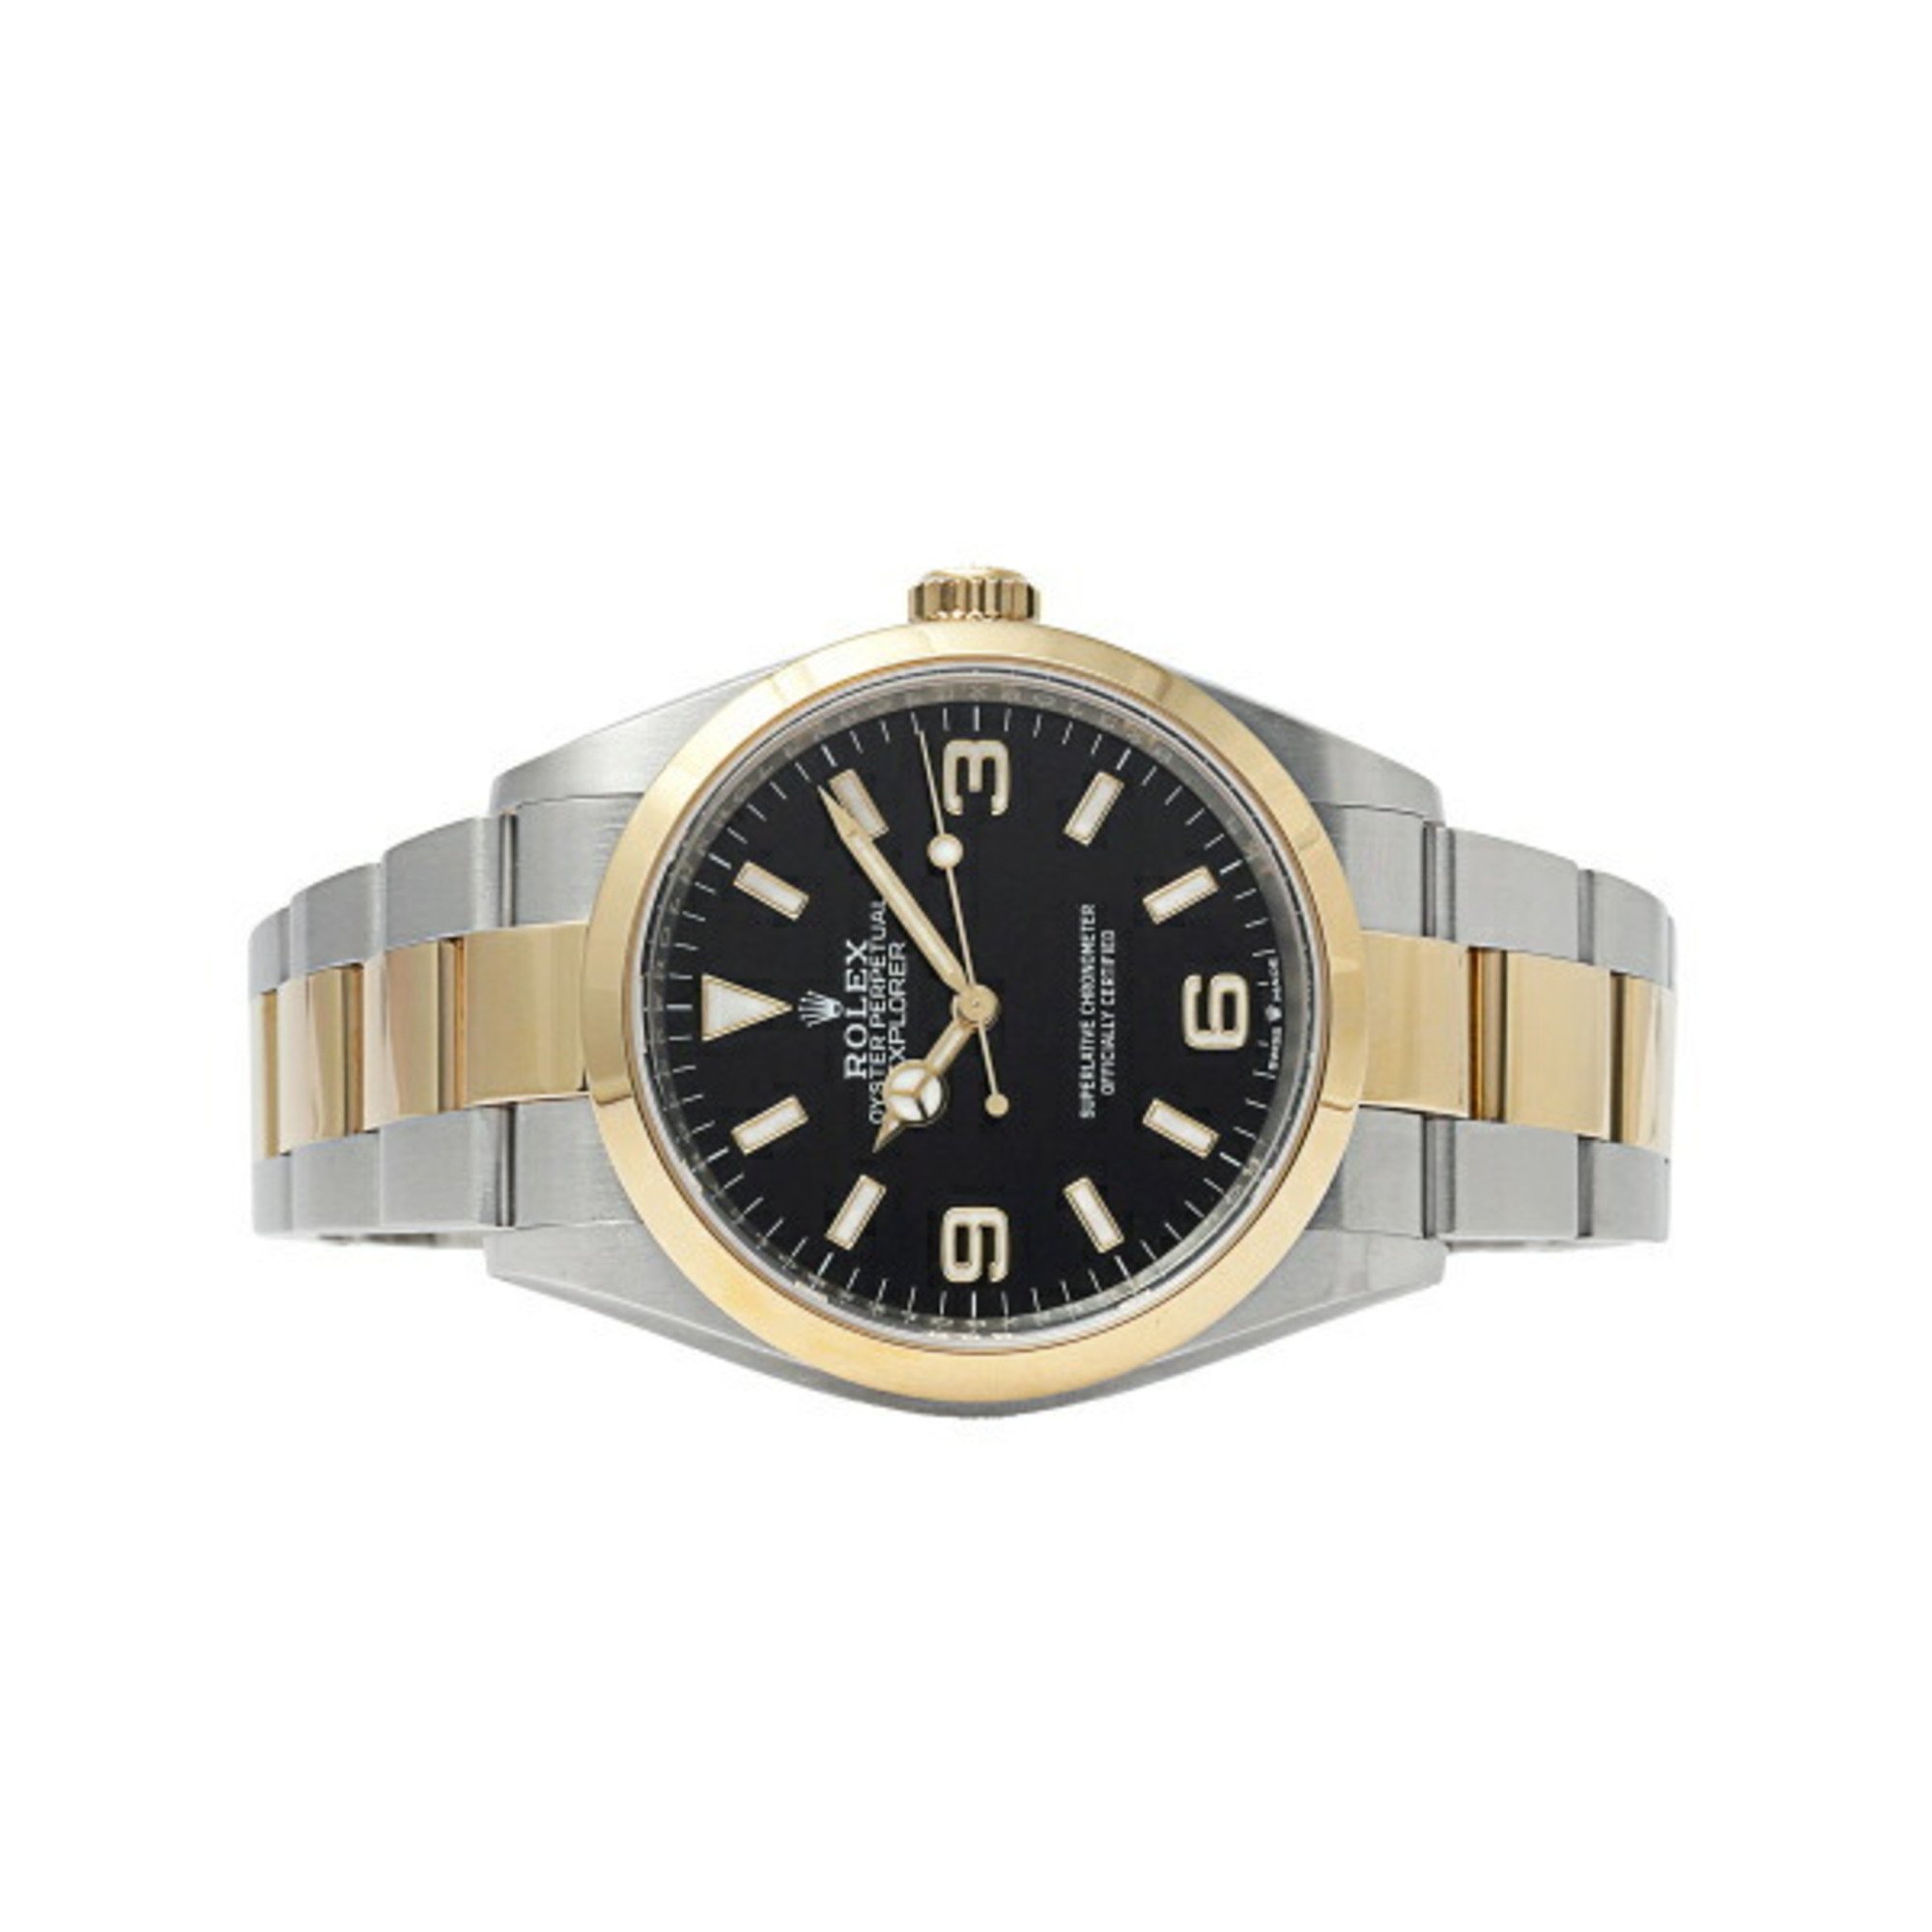 Rolex Explorer 36 124273 Black Dial Watch Men's